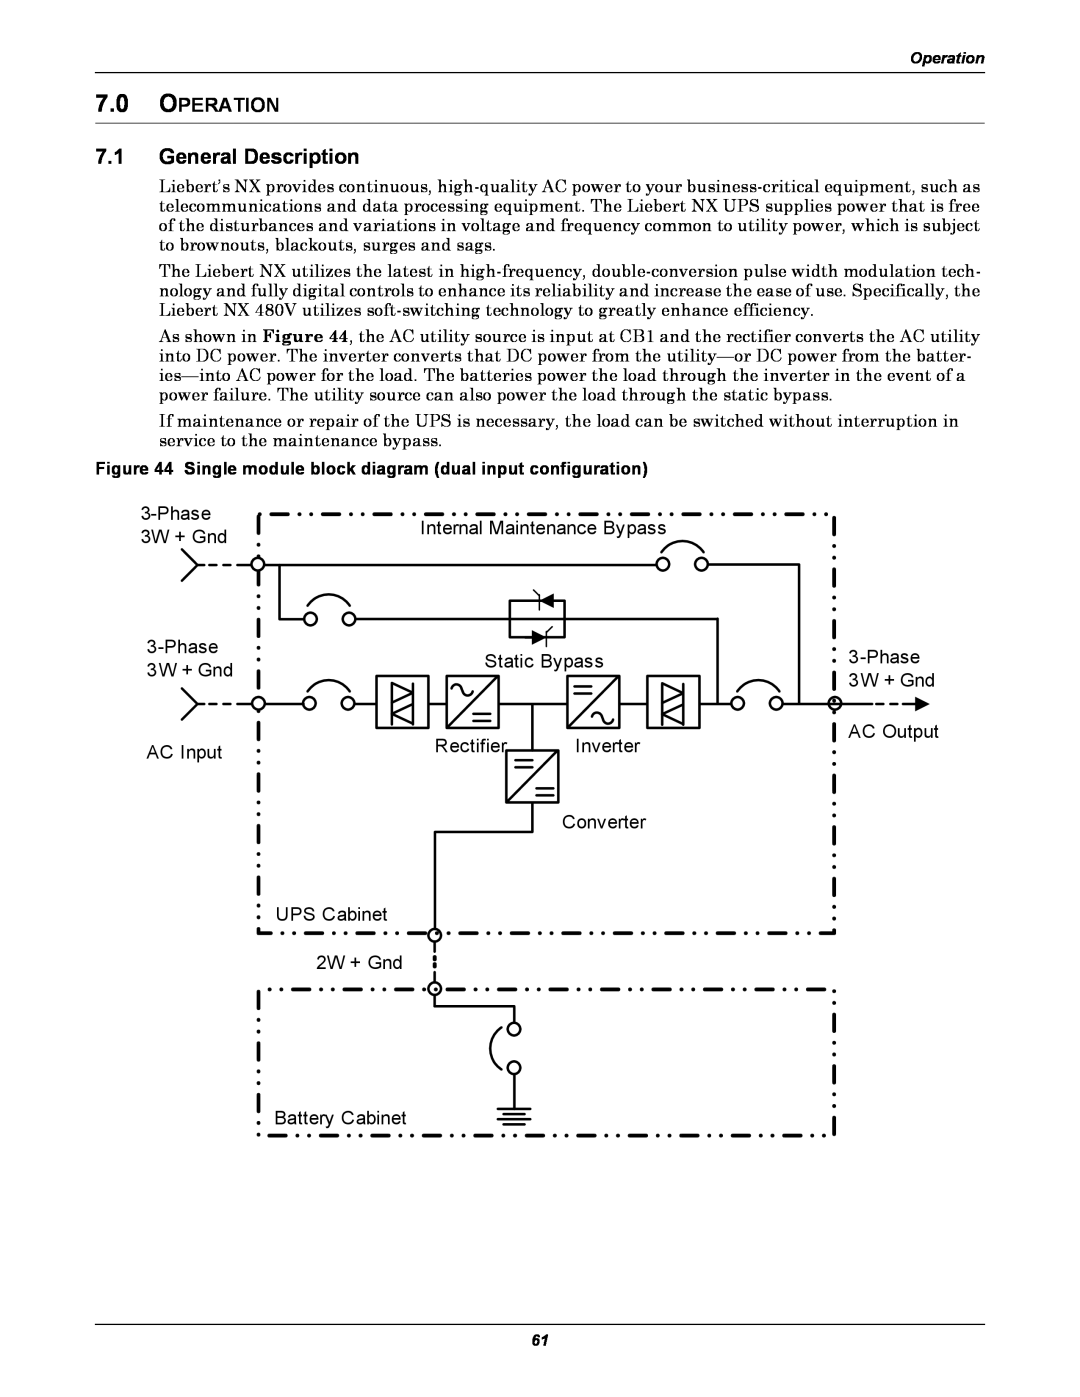 Emerson 480V, 60HZ user manual 7.1General Description, 7.0OPERATION 